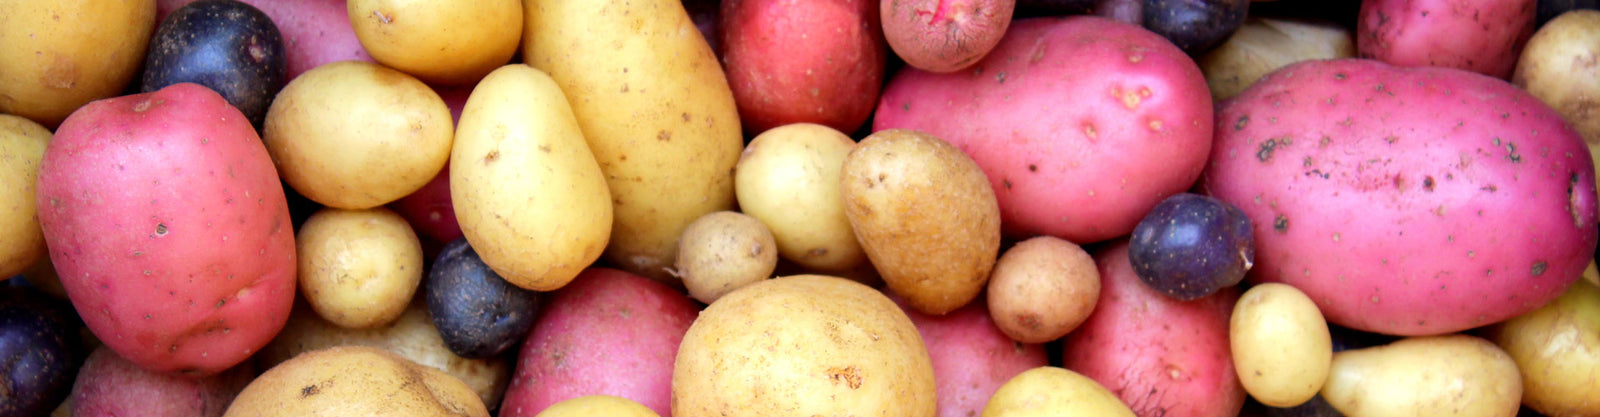 increase potato yields